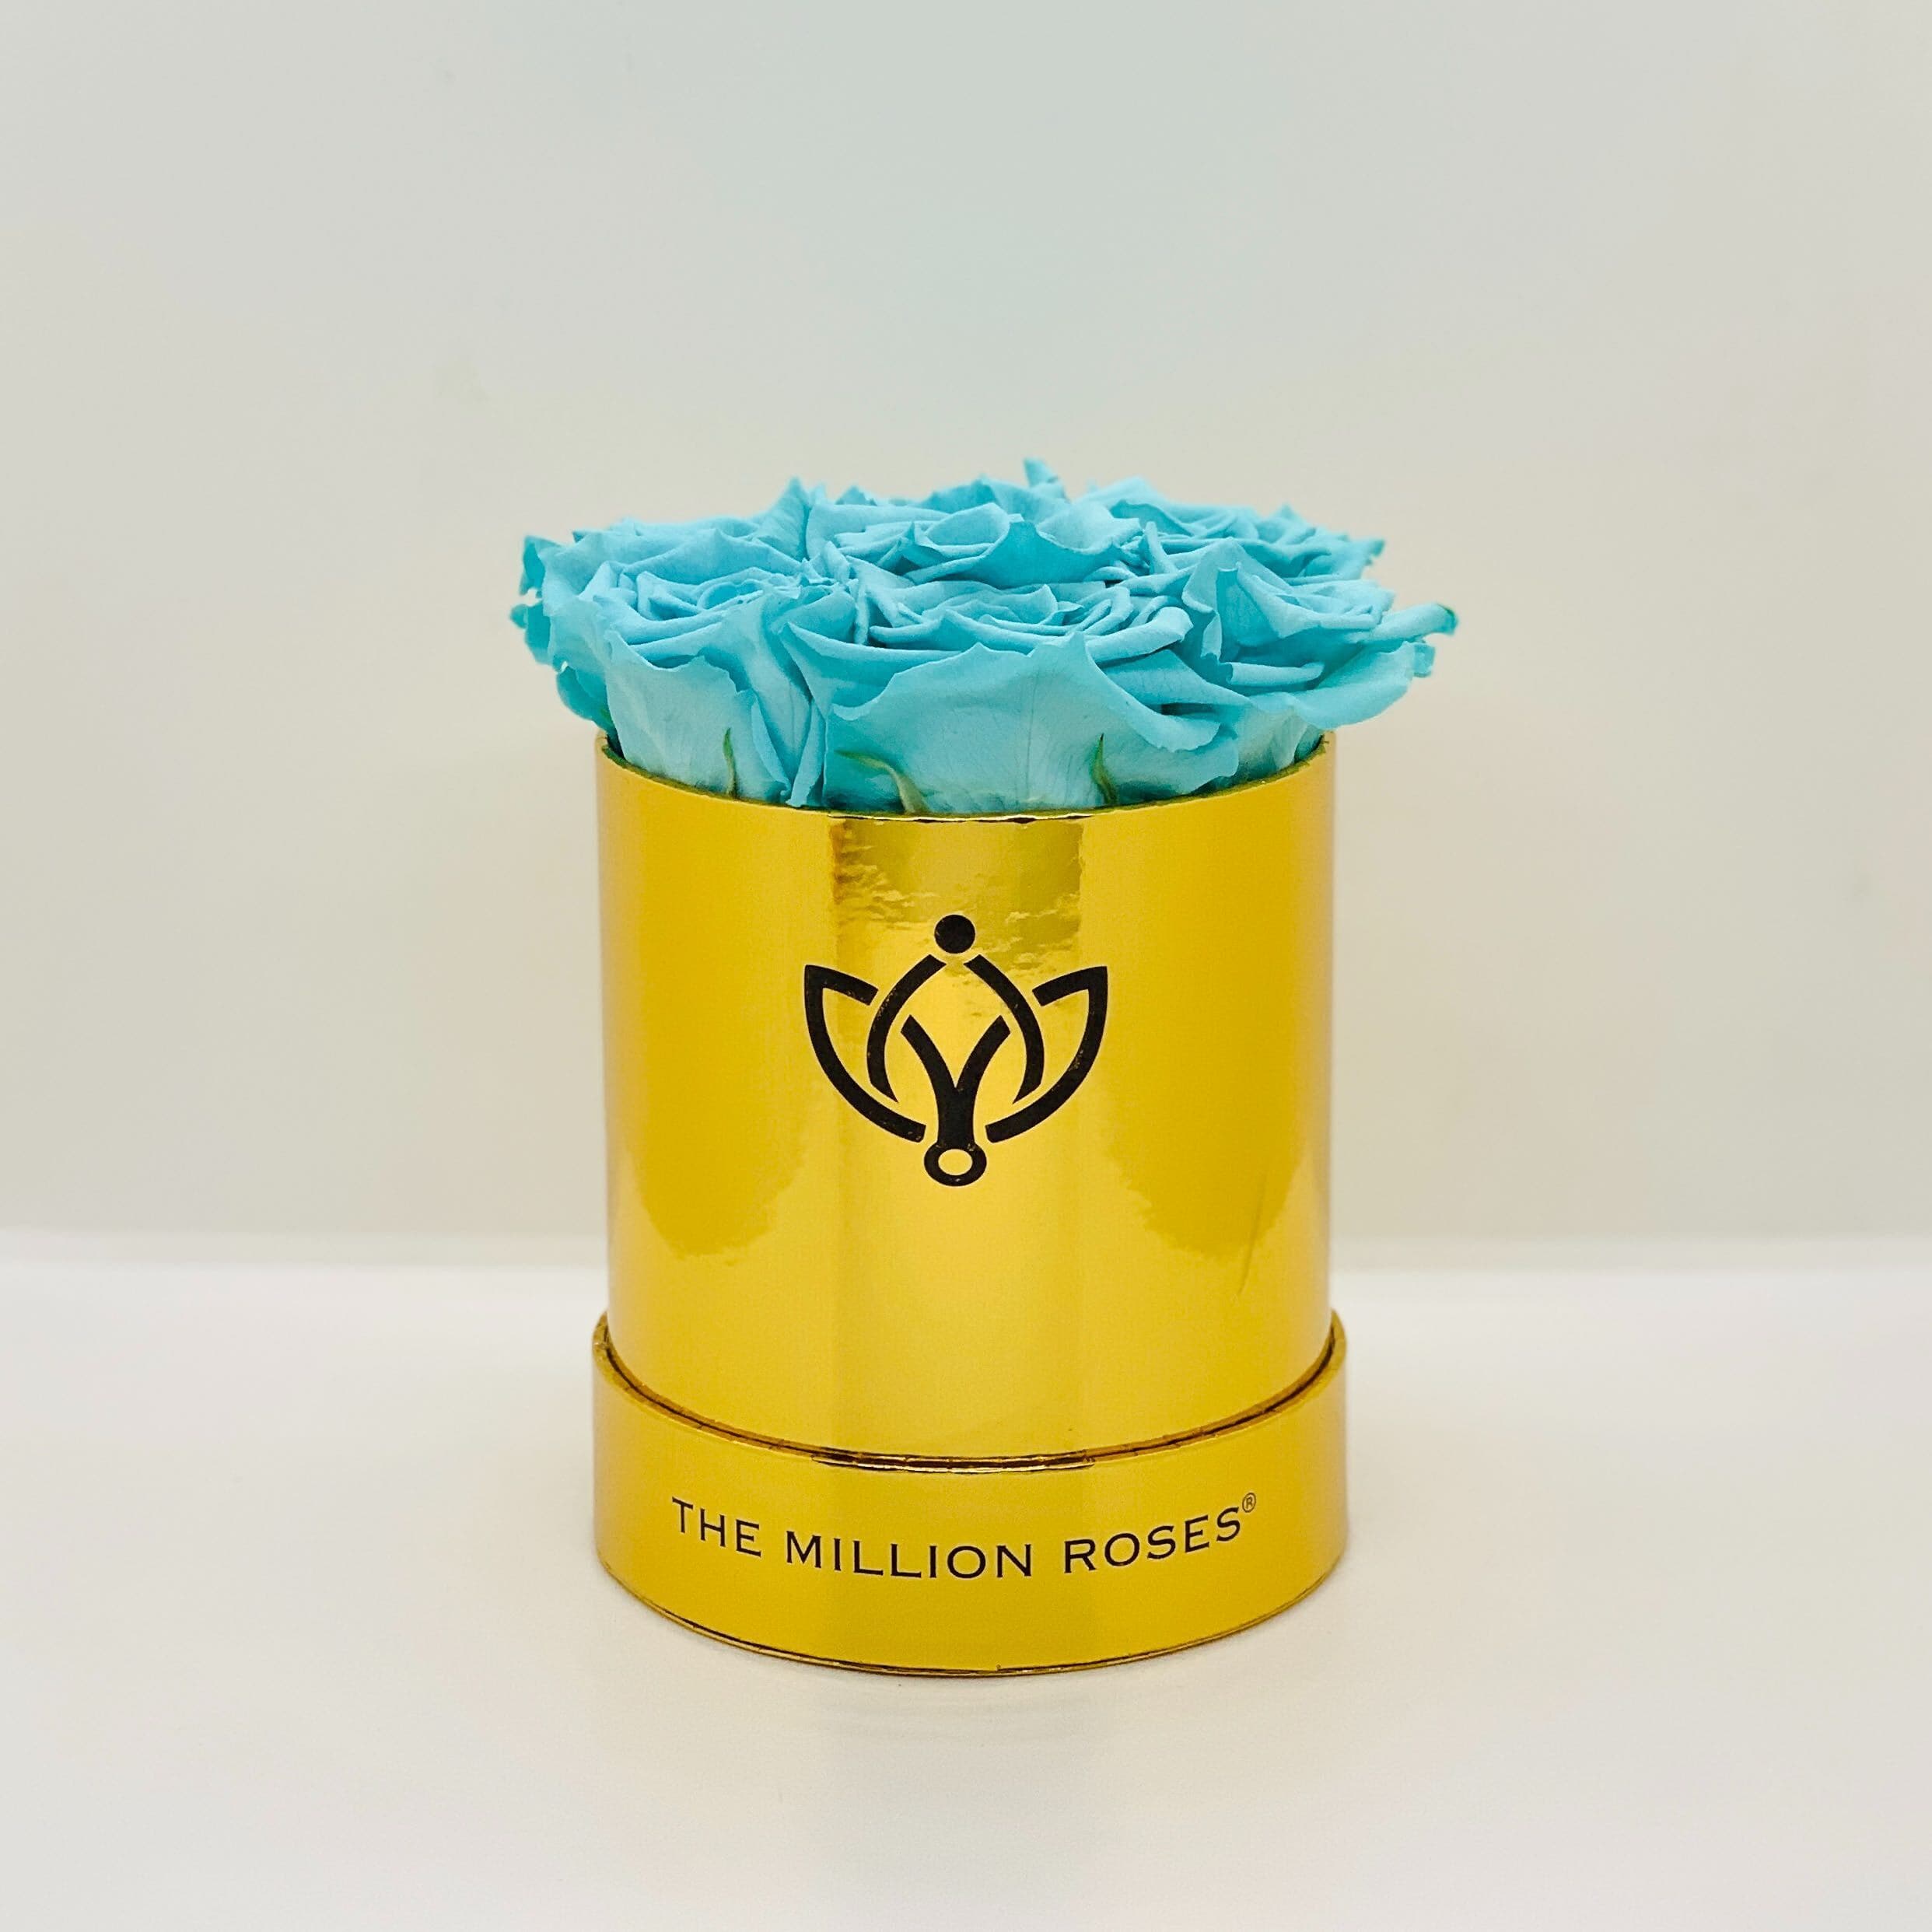 Basic Mirror Gold Box | Turquoise Roses - The Million Roses